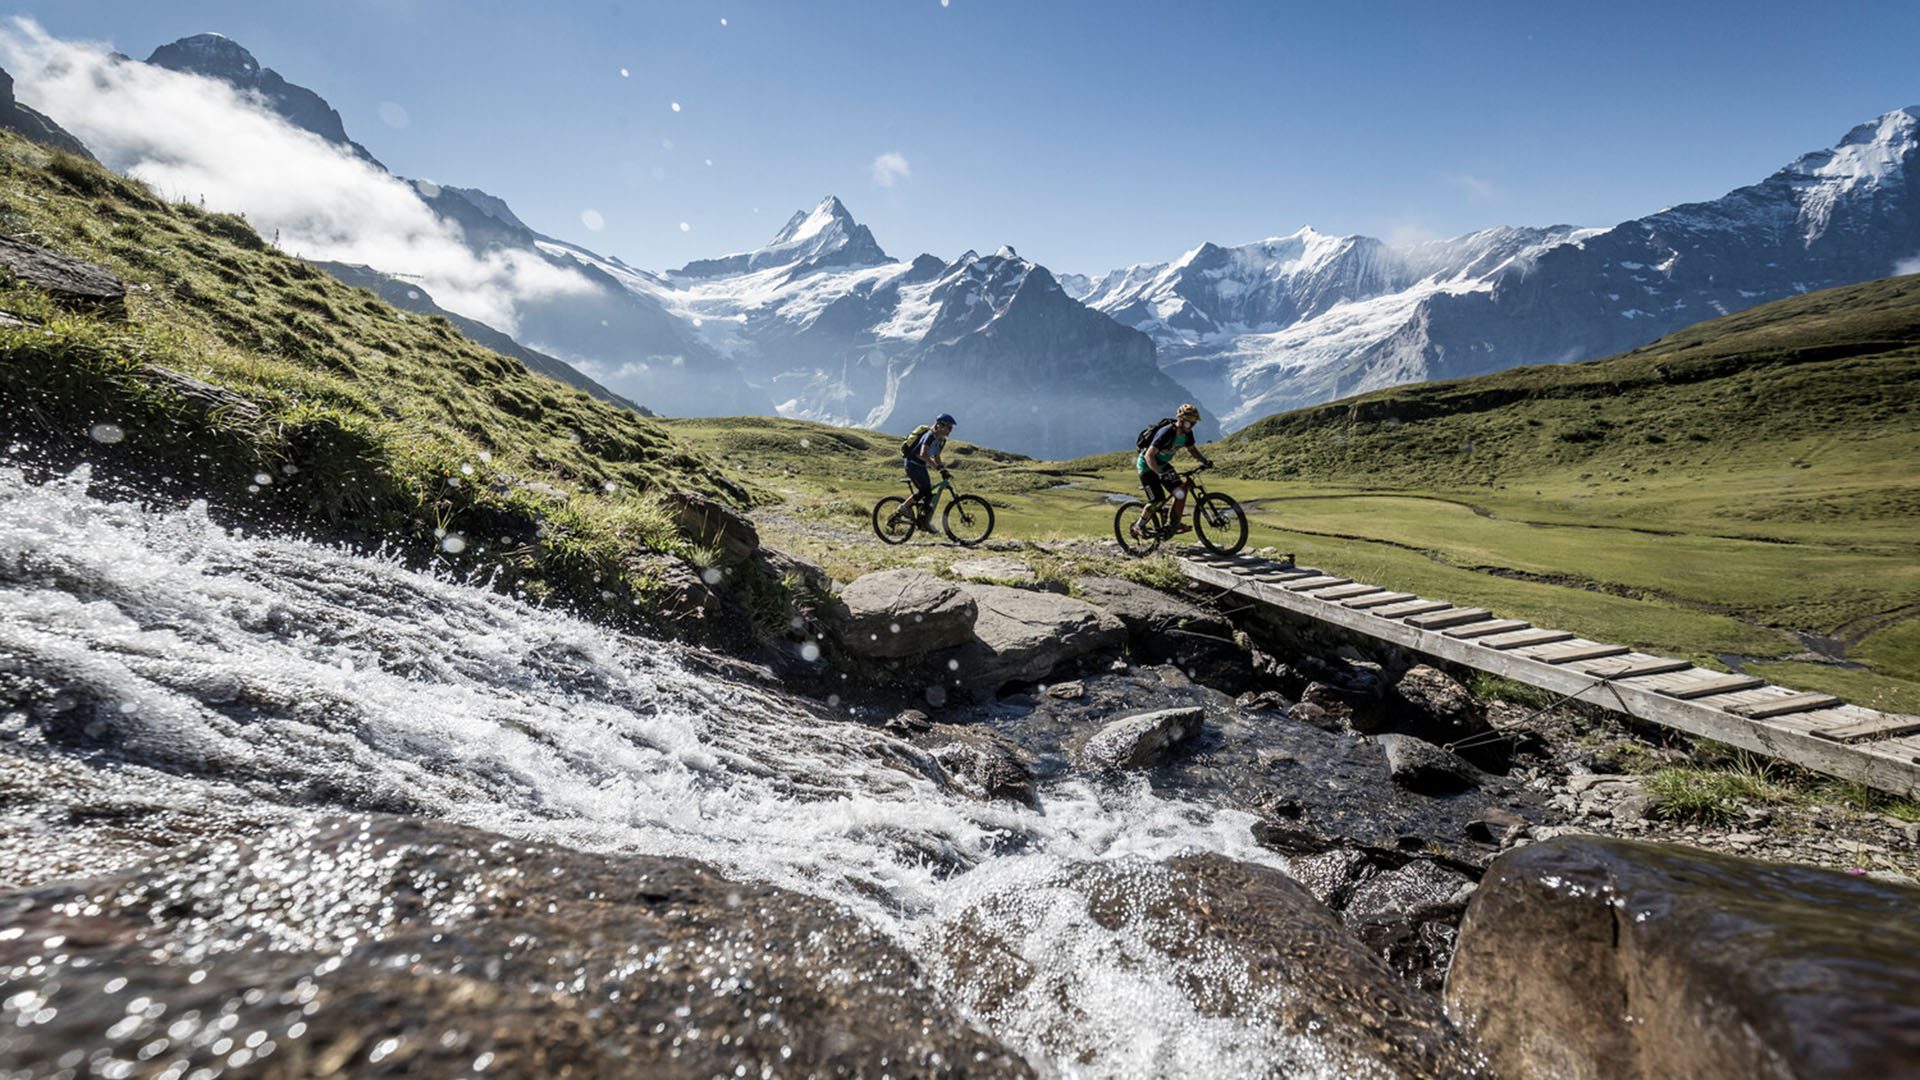 Jungfrau Region: Outdoor Sports, Adventure And Fun